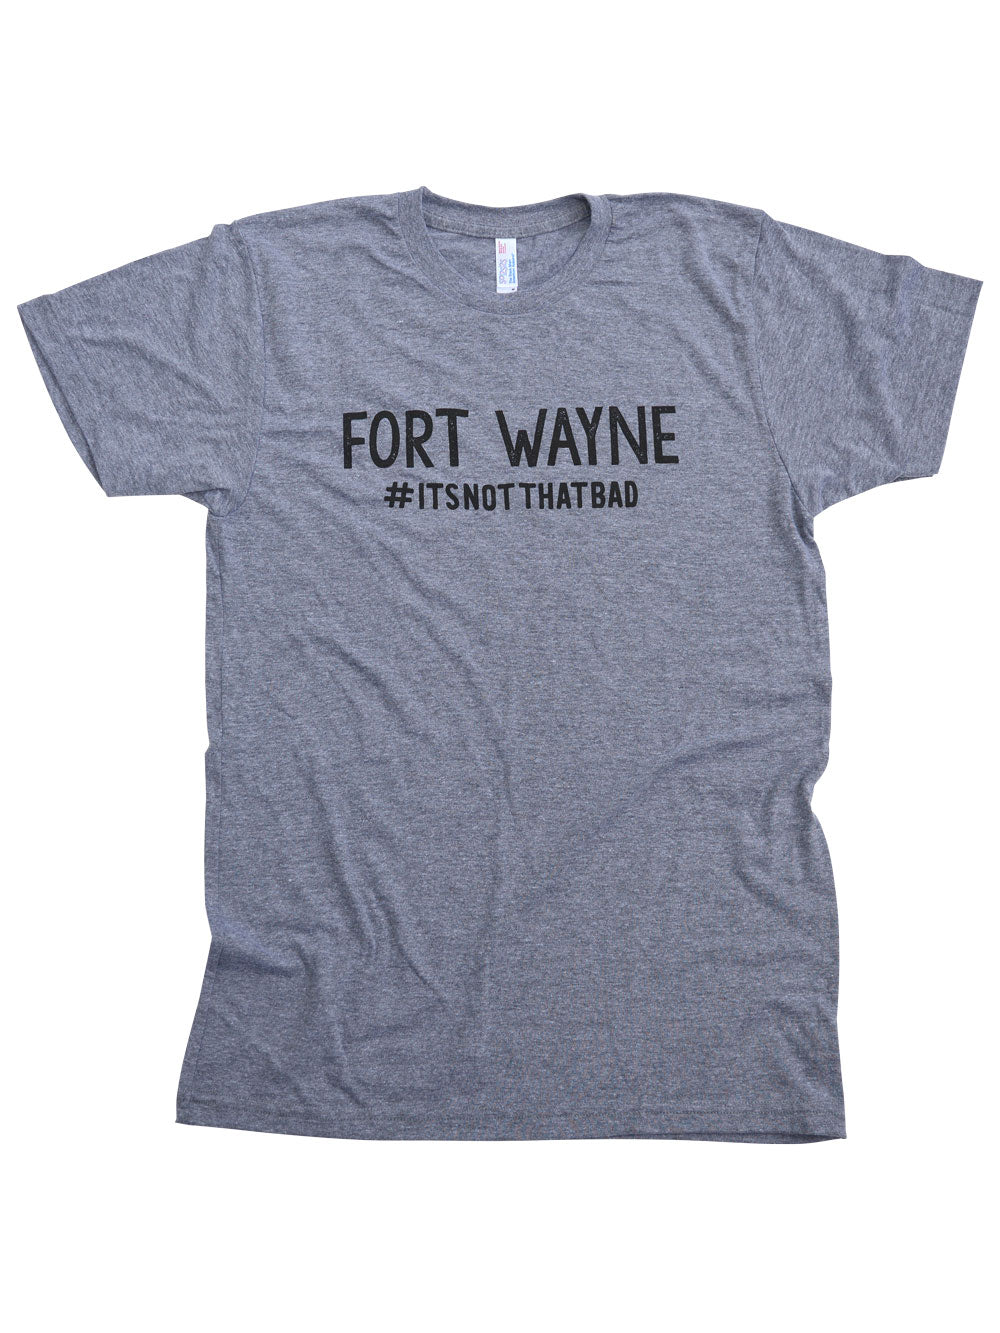 Fort Wayne #itsnotthatbad gray heather t-shirt